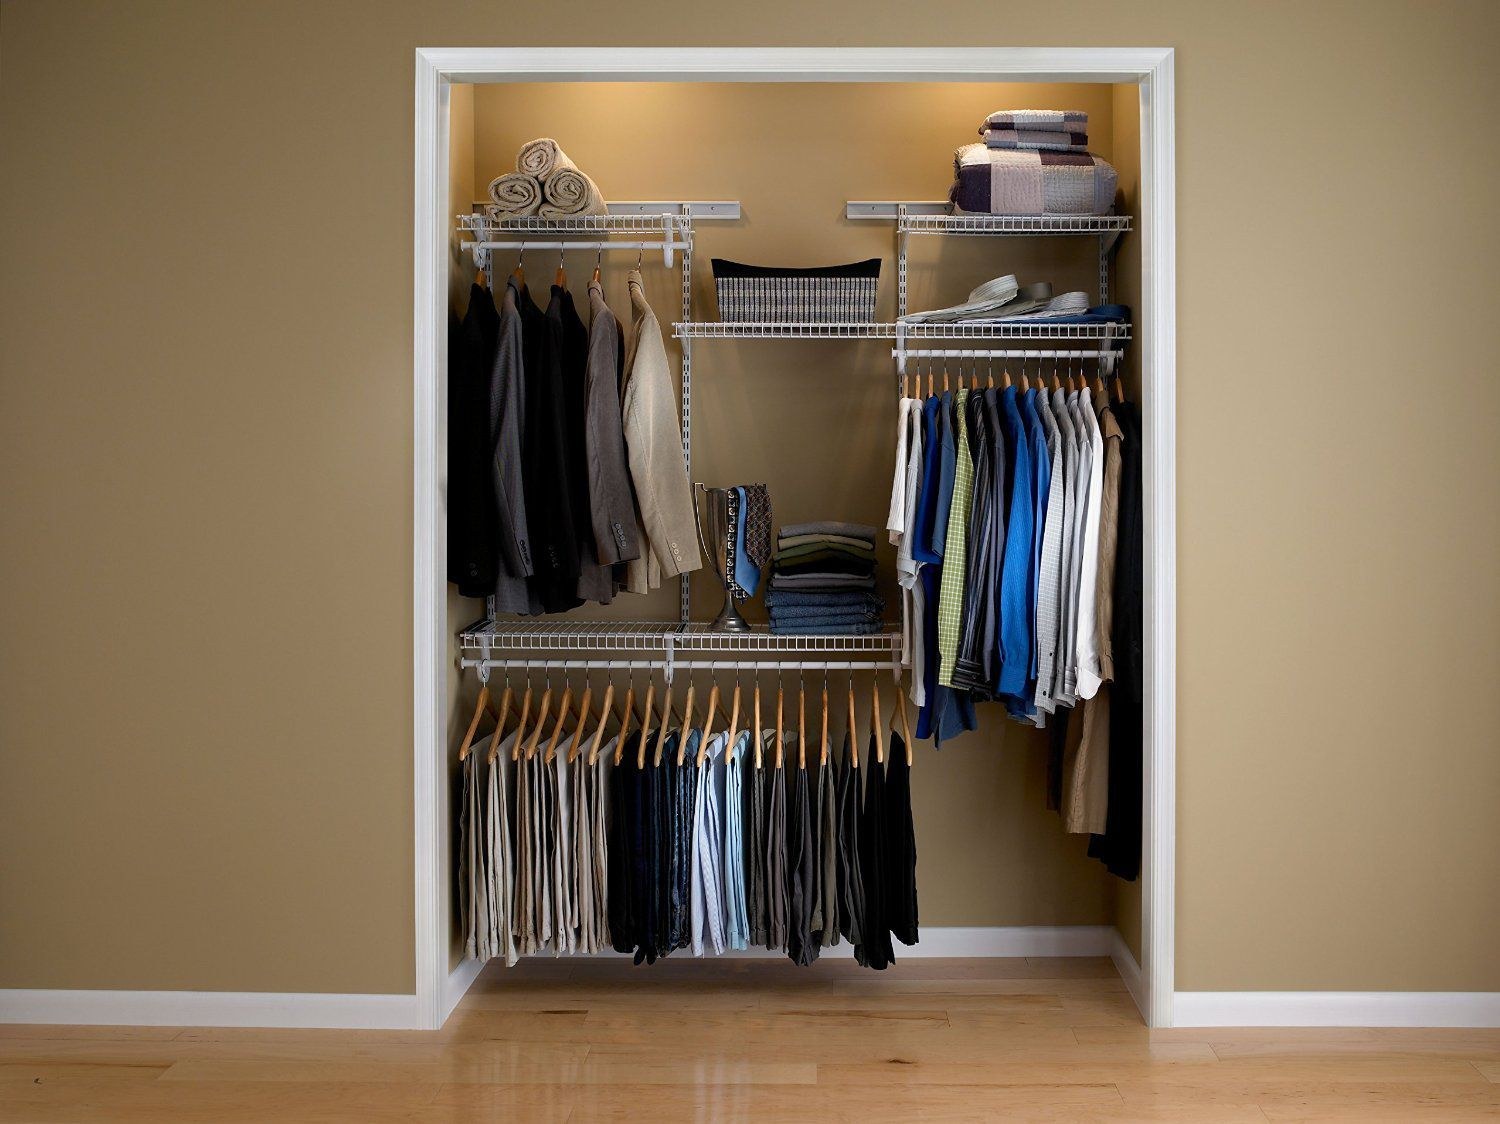 Мега гардероб. Closetmaid гардеробные системы. Мини гардеробная. Гардеробные в нишах. Мини гардеробные в комнате.